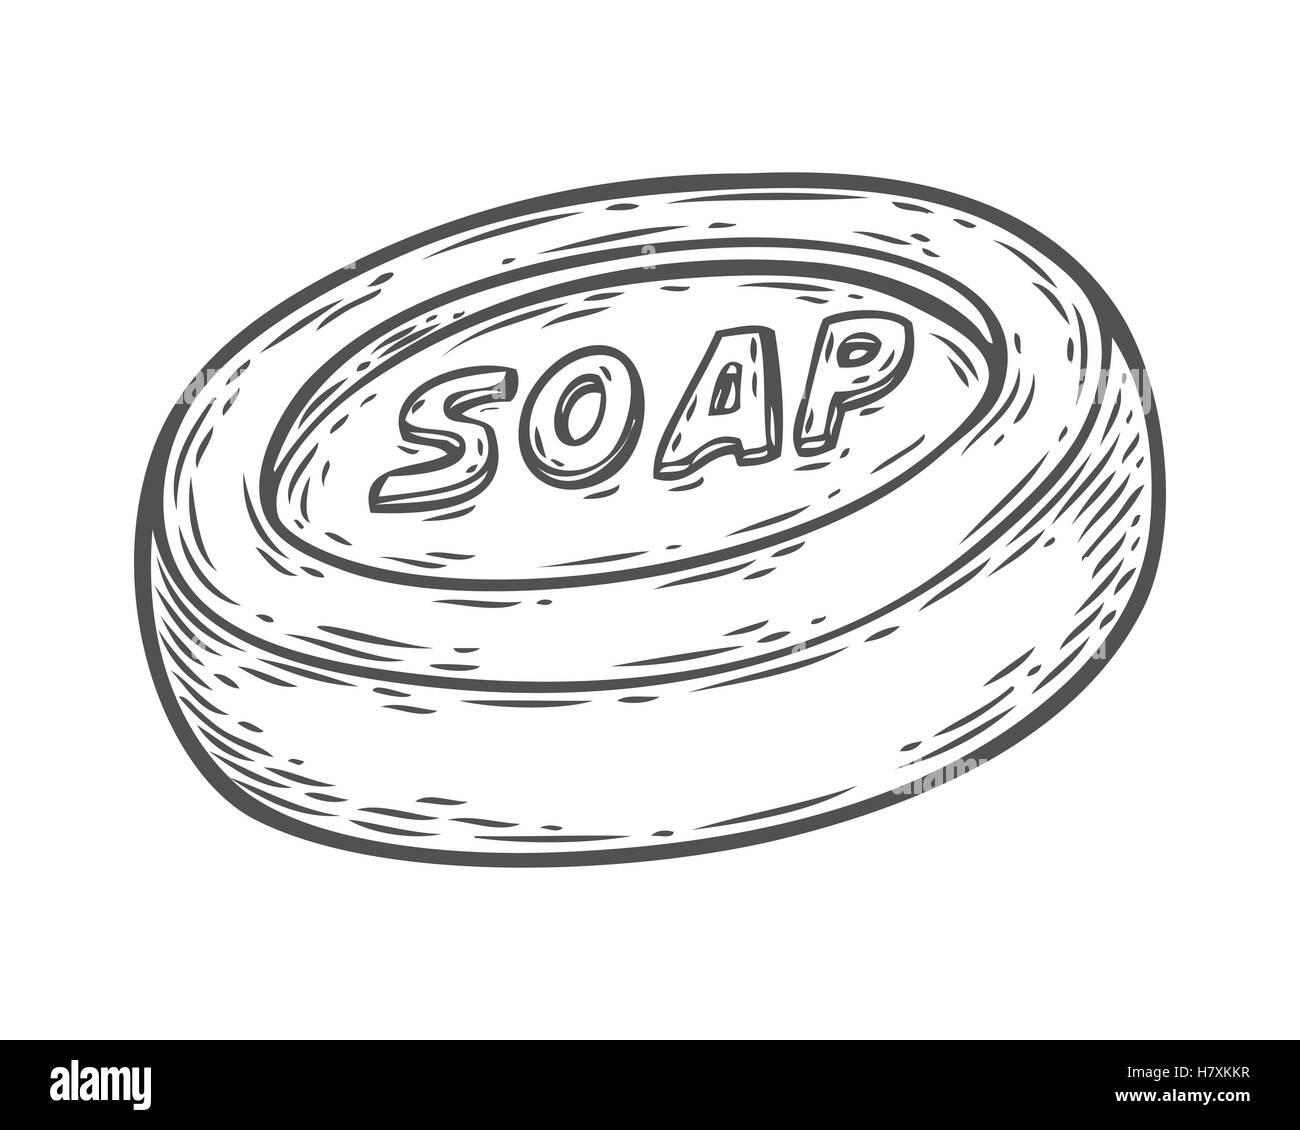 Soap dick pic